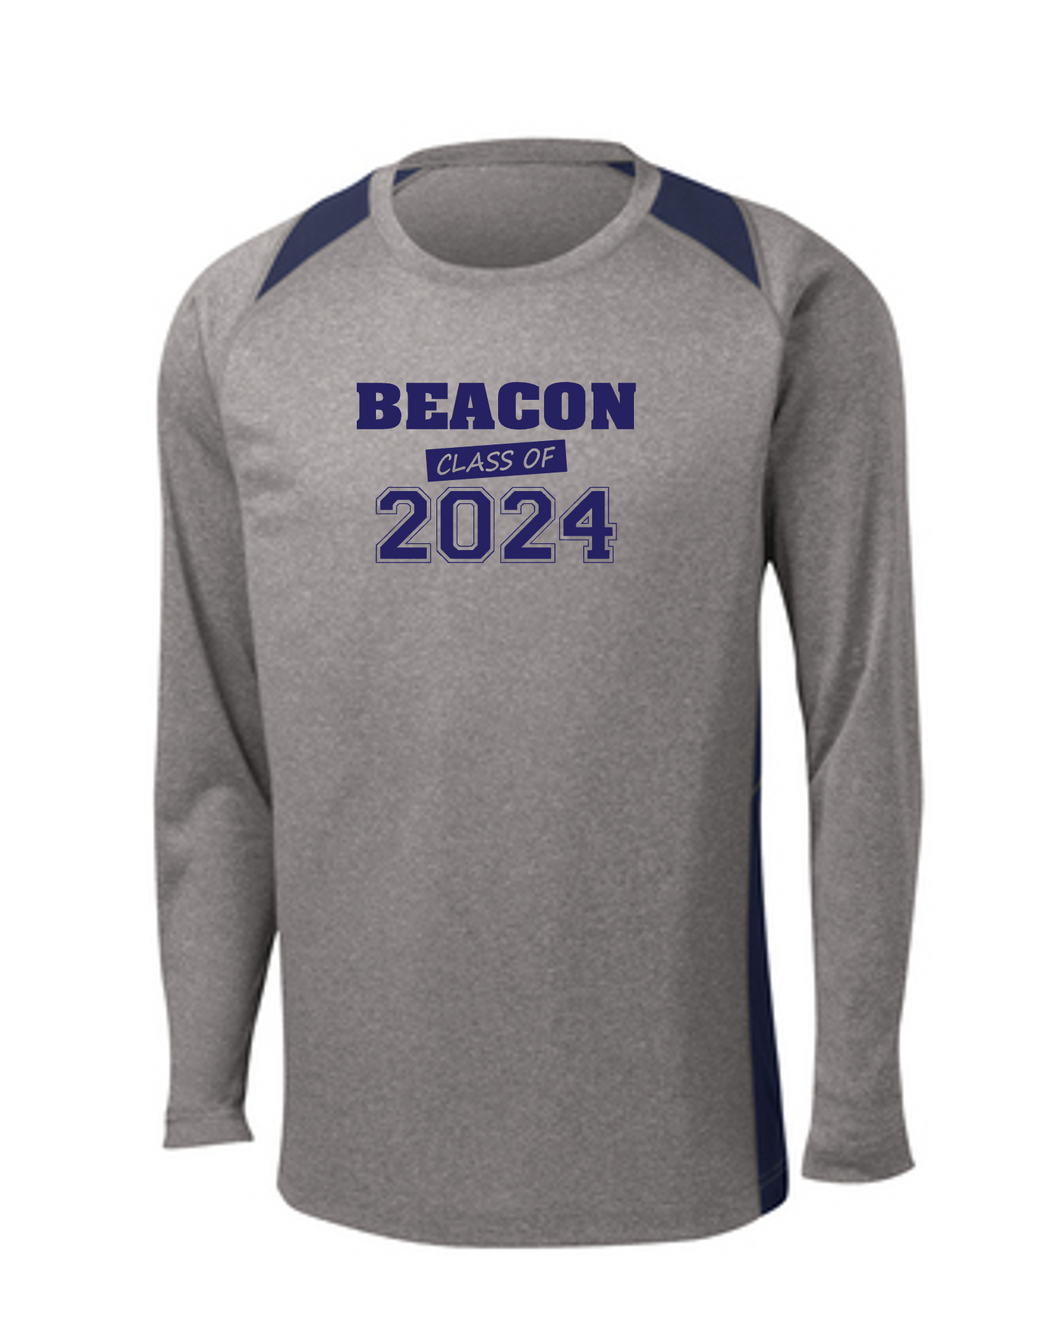 Sport-Tek® Long Sleeve Heather Colorblock Contender™ Tee - Beacon Class of 2024